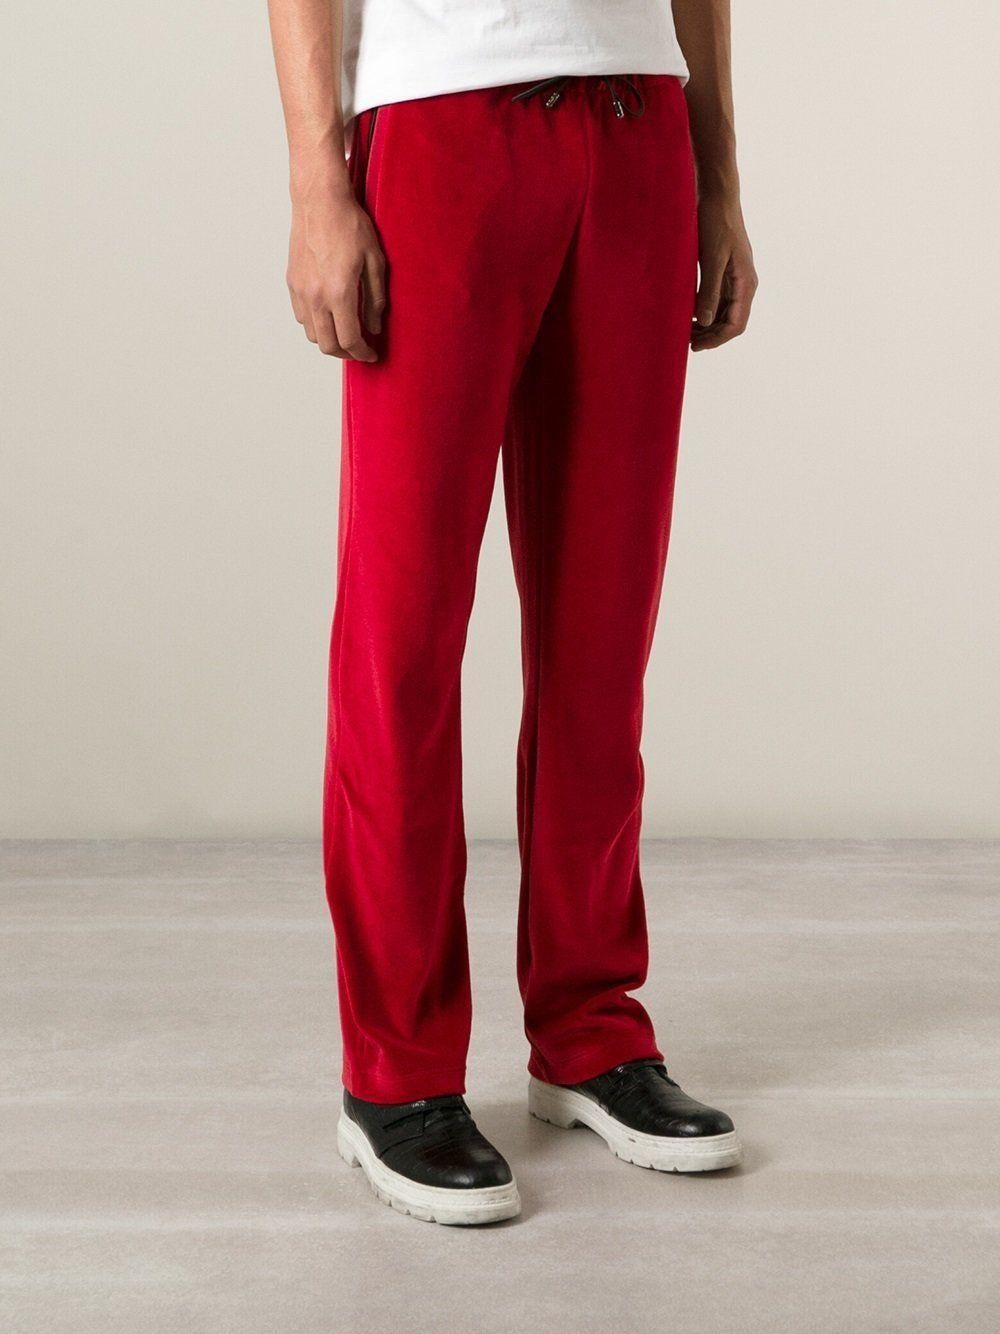 New Versace Medusa Men's Red Velvet Sweatpants Black Leather Trim size XL 1